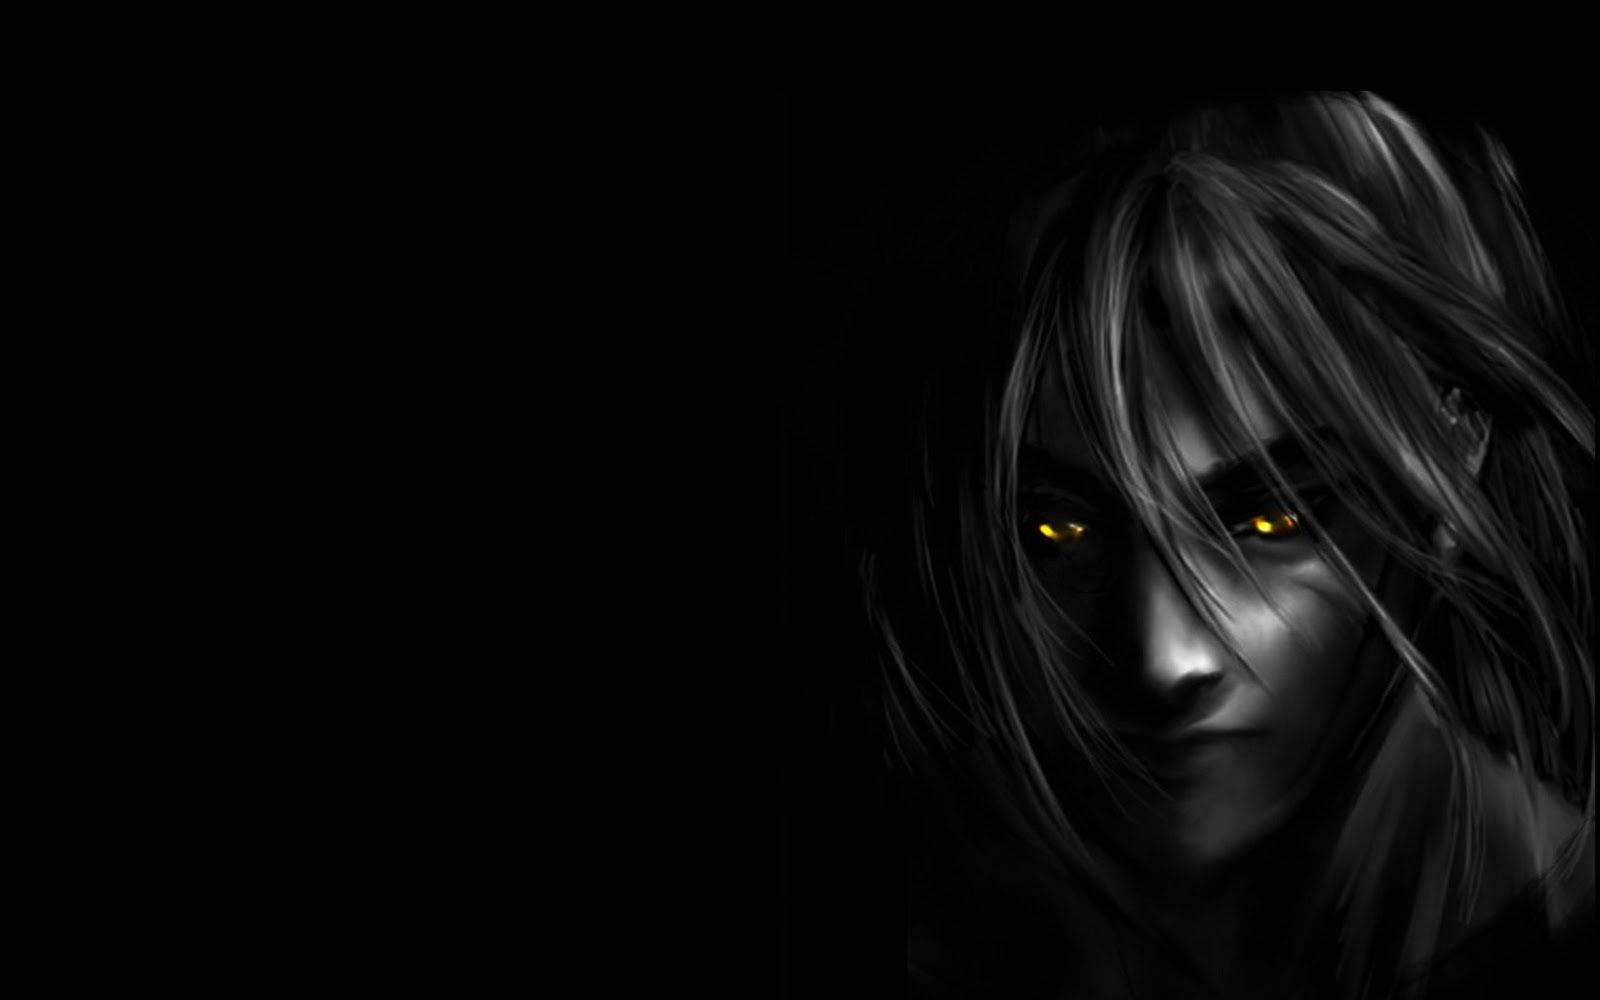 Dark Anime Man With Yellow Eyes Background